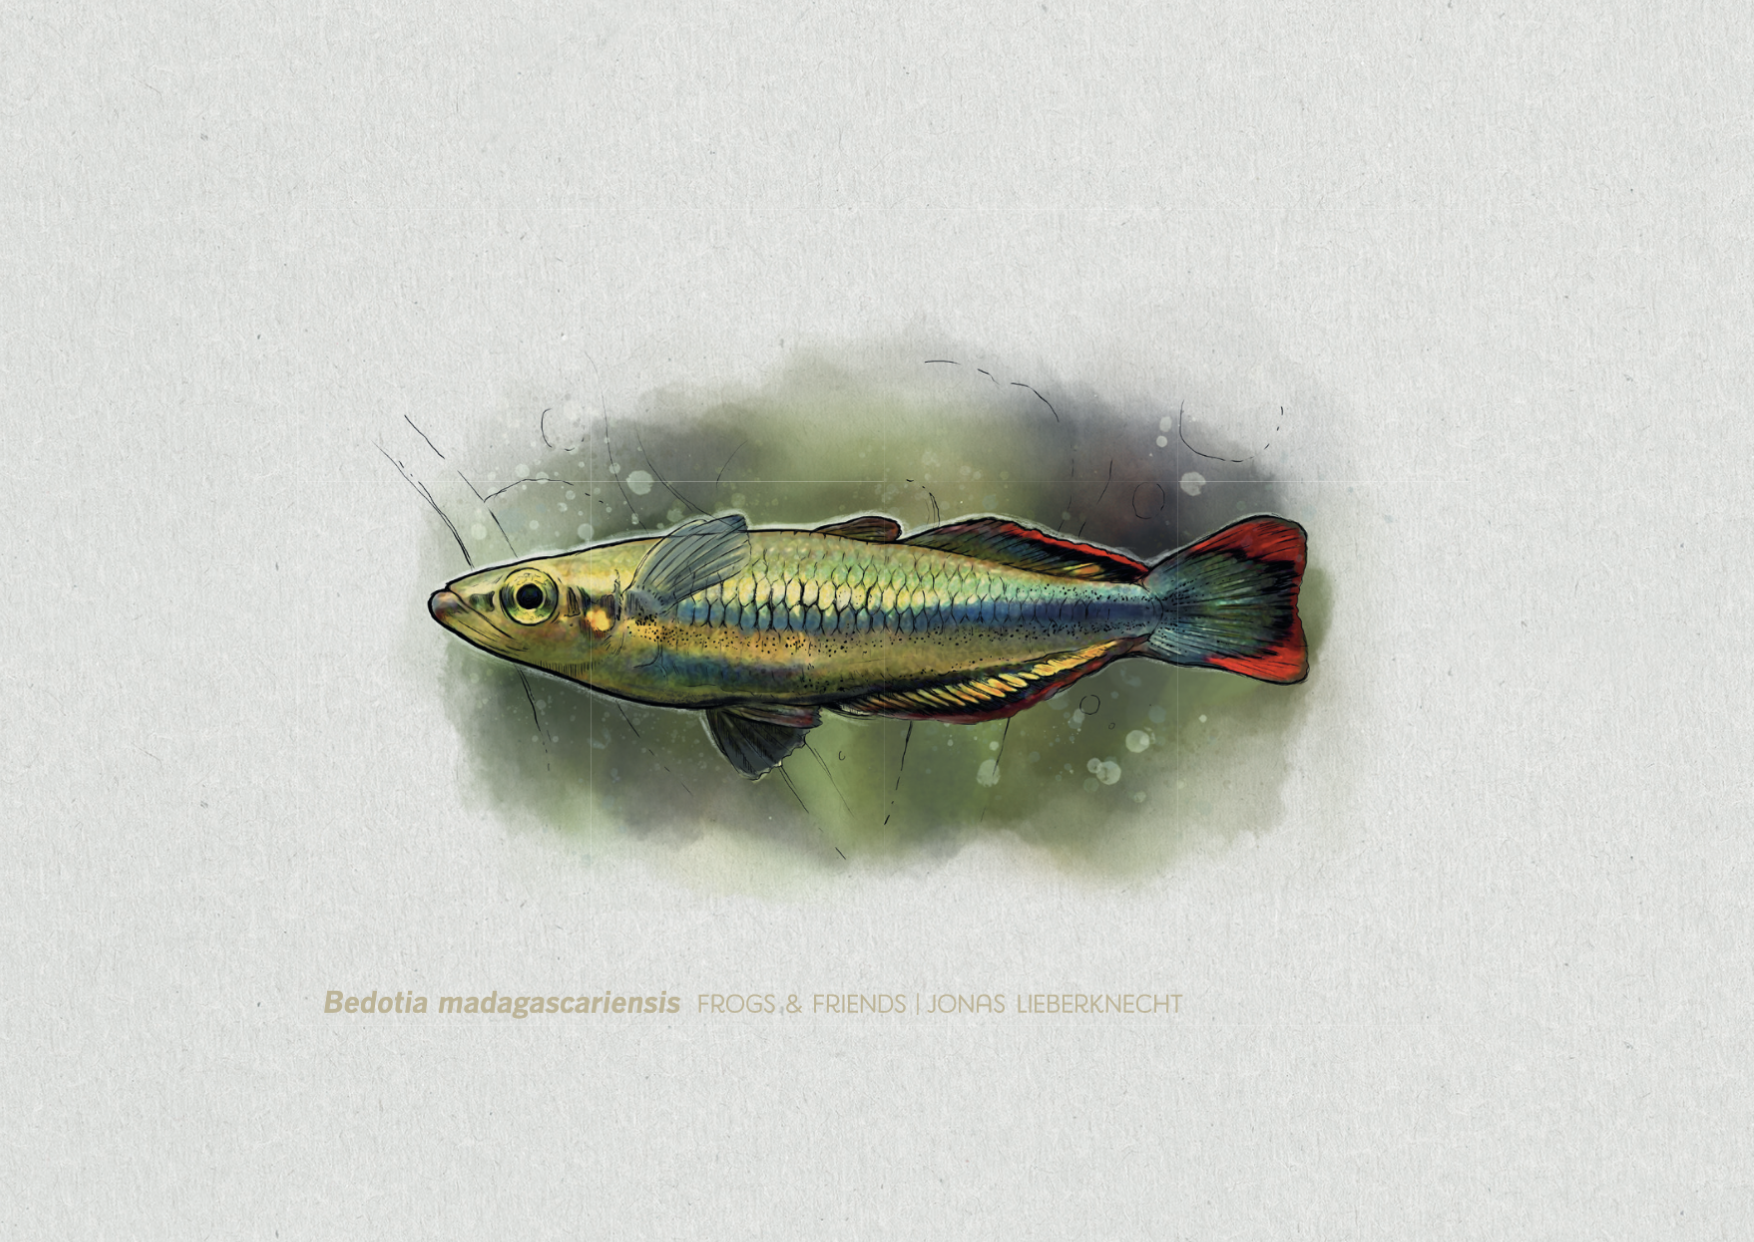 No. 17: Madagascan-Rainbow Fish (Bedotia madagascariensis) | Jonas Lieberknecht 
(A6 postcard format in picture mount)